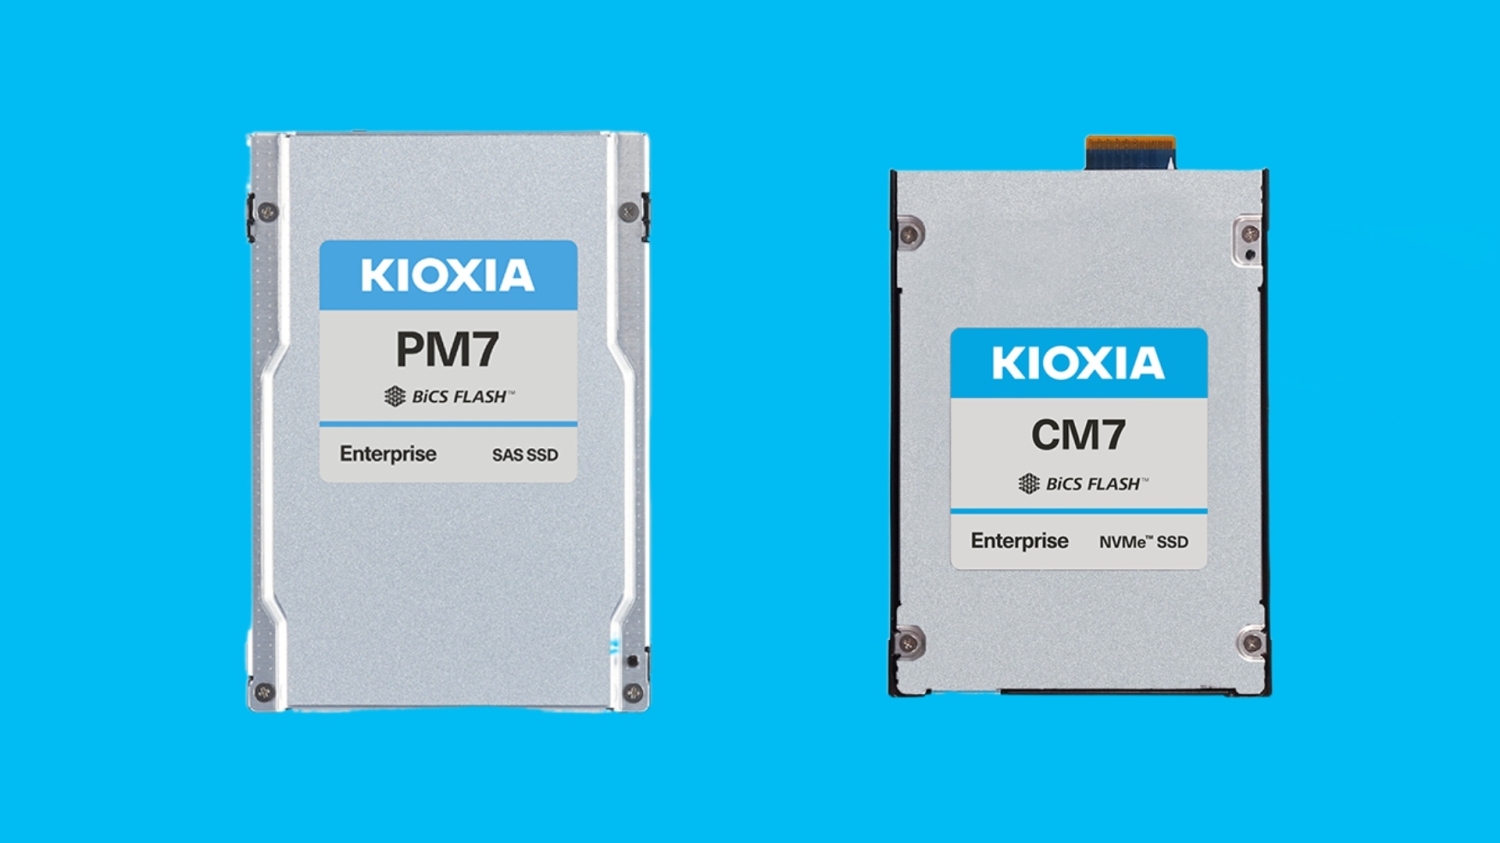 TweakTown Enlarged Image - KIOXIA CM6 Series Enterprise NVMe SSDs and KIOXIA PM7 Series 24G Enterprise SAS SSDs for the cloud, image credit: KIOXIA.